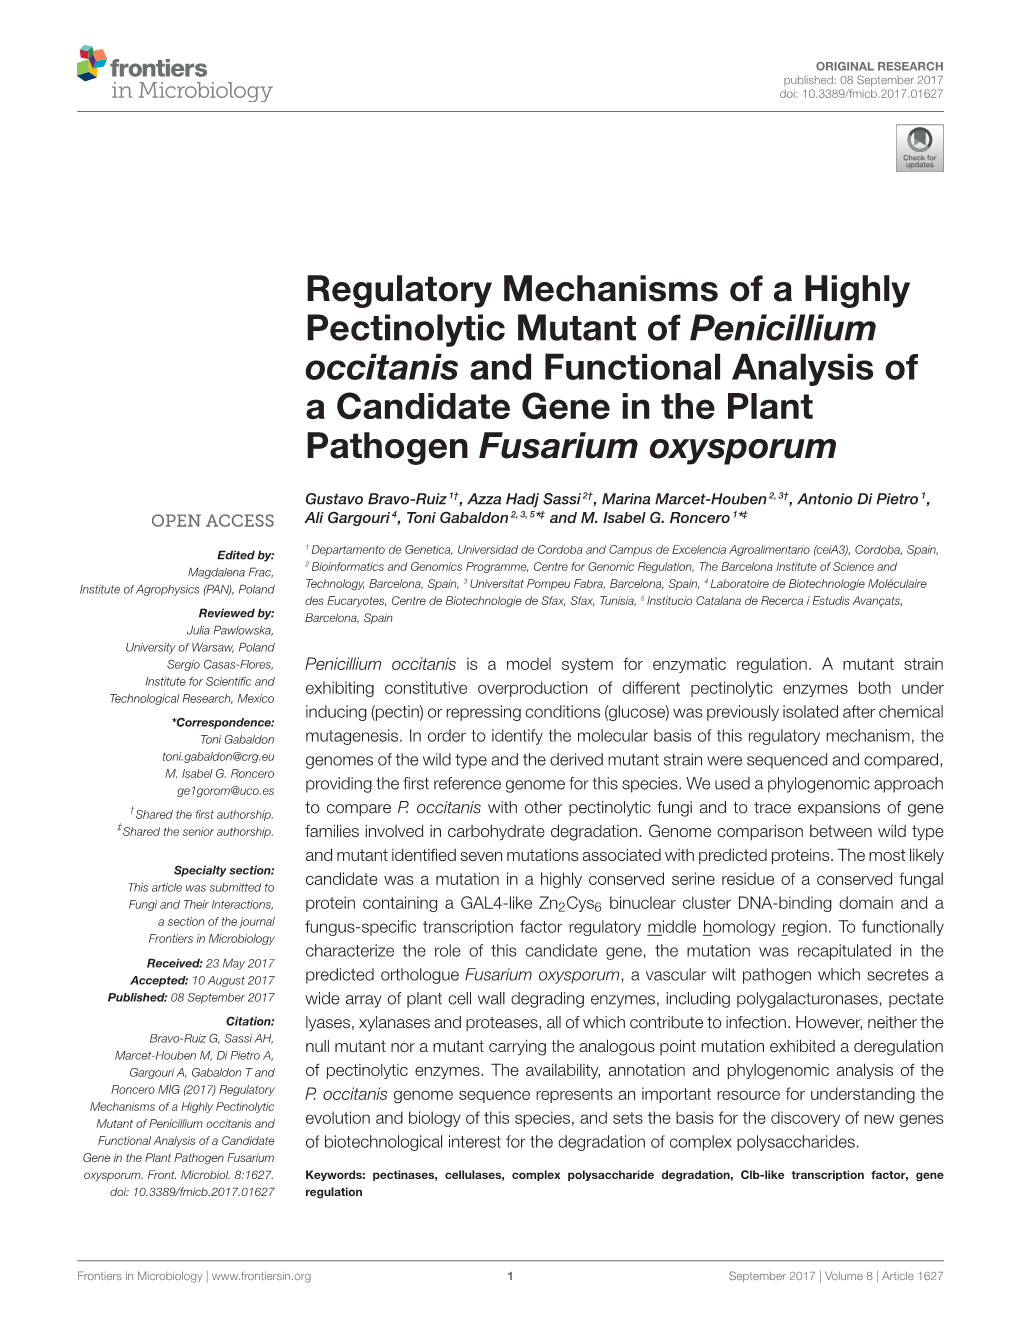 Regulatory Mechanisms of a Highly Pectinolytic Mutant of Penicillium Occitanis and Functional Analysis of a Candidate Gene in the Plant Pathogen Fusarium Oxysporum